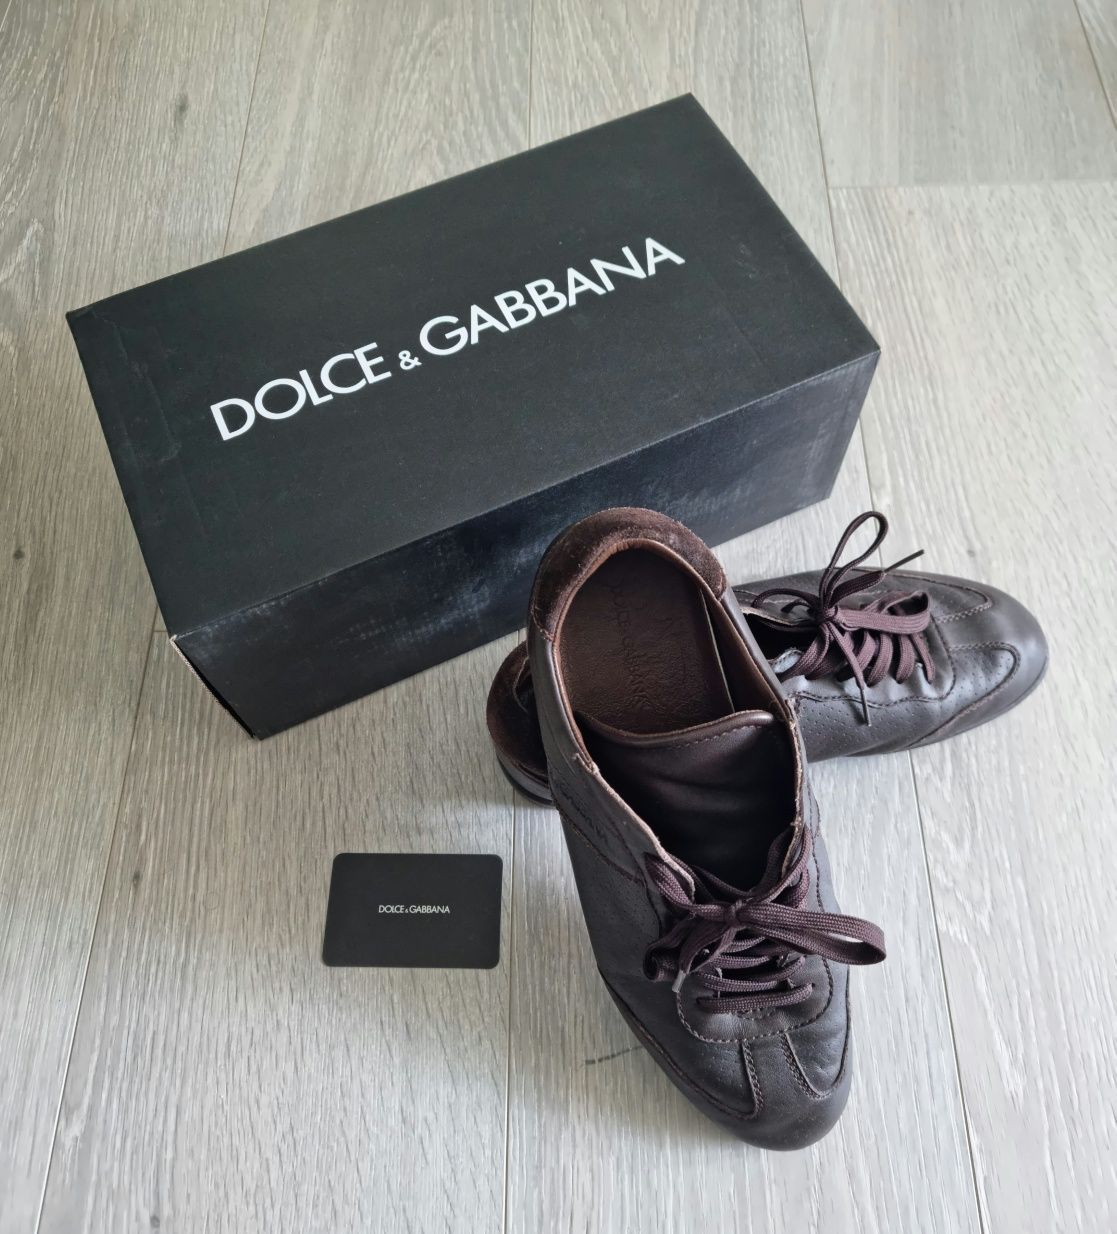 Ténis Dolce & Gabbana originais